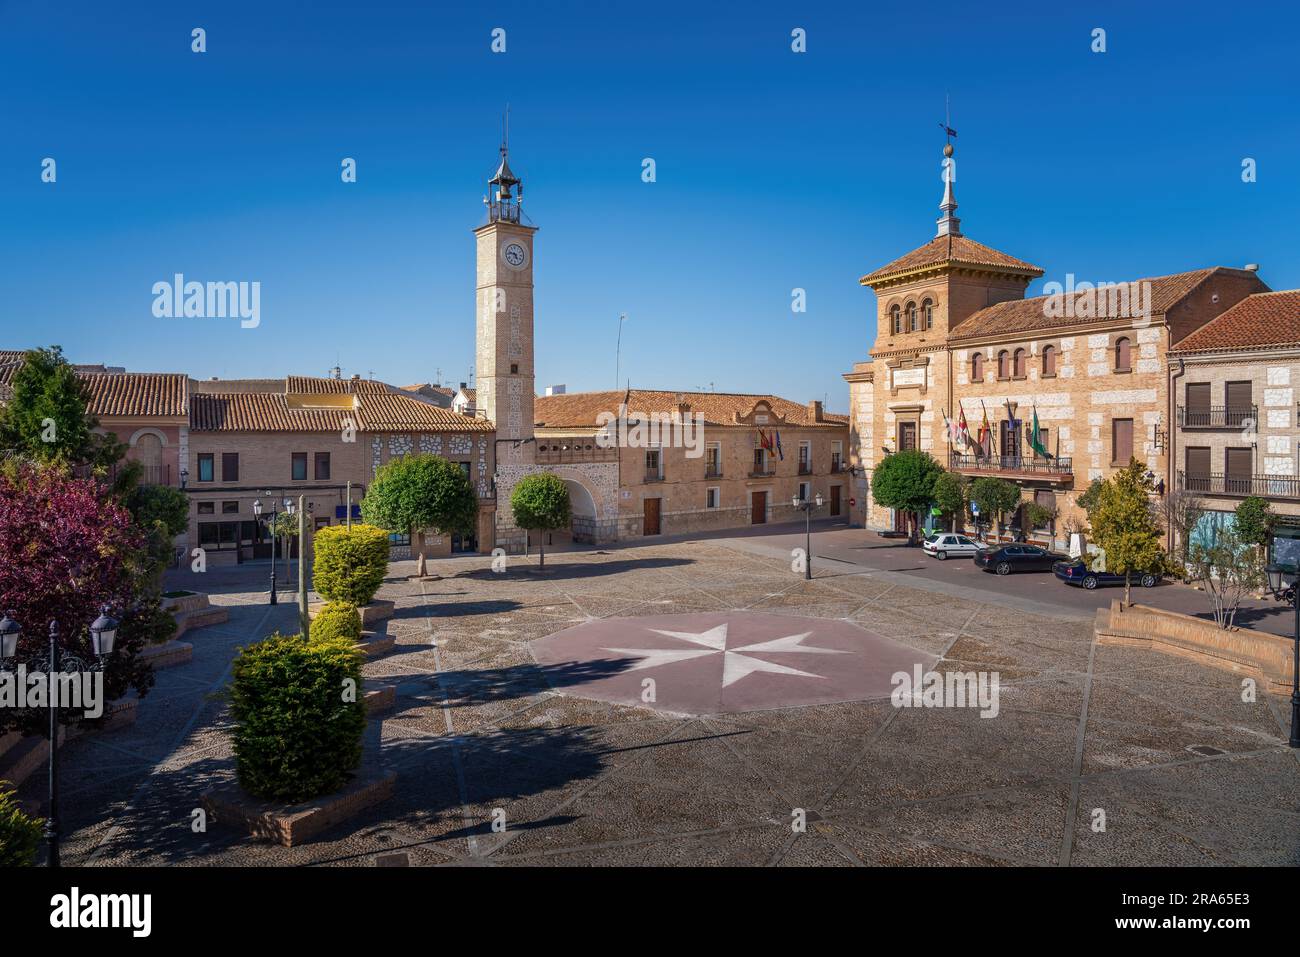 Plaza de Espana Square with Clock Tower (Torre del Reloj) and Consuegra City Hall - Consuegra, Castilla-La Mancha, Spain Stock Photo